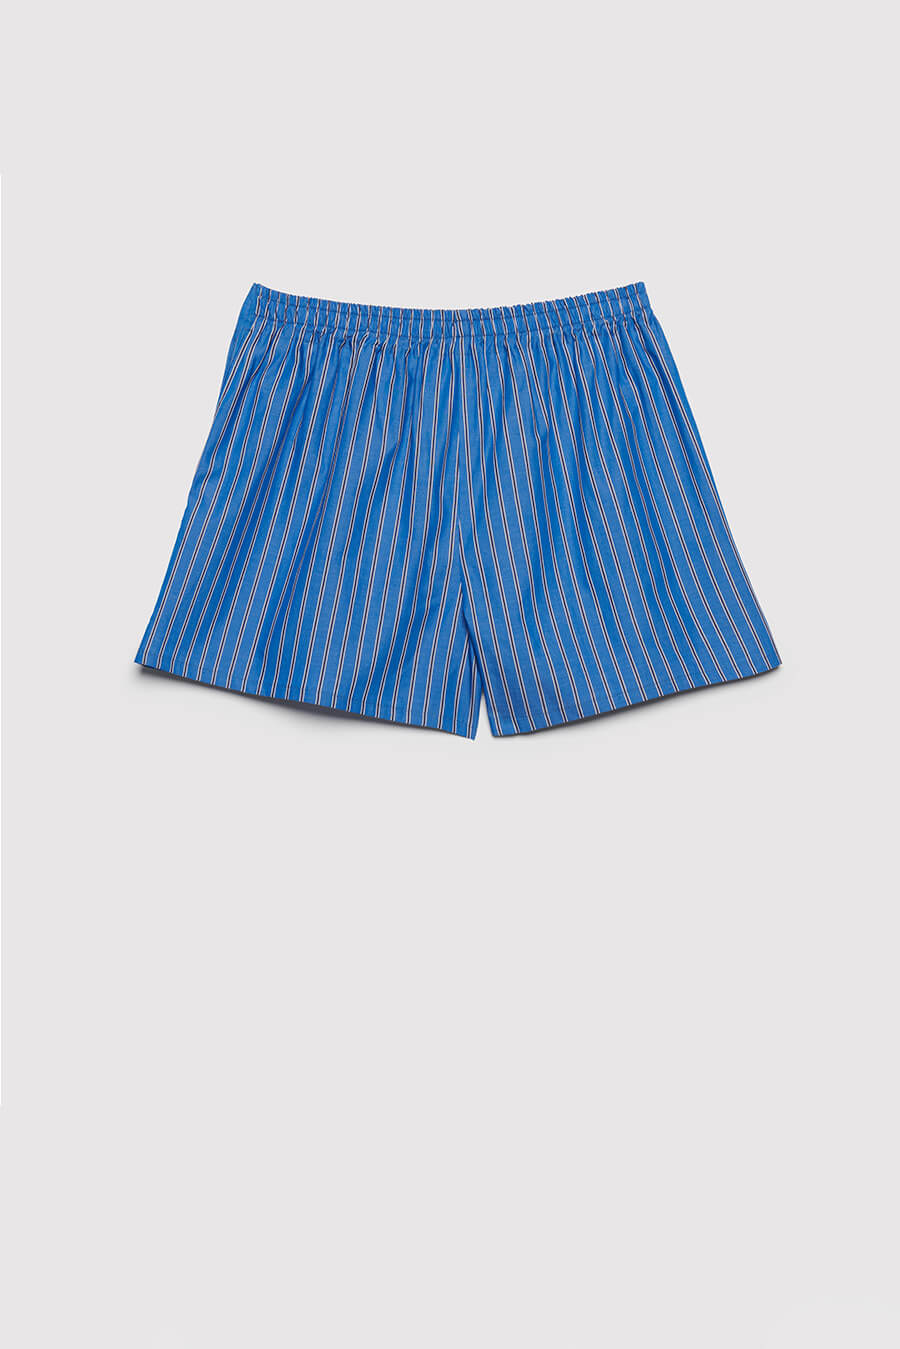 Chimera Sleepwear Linda Striped Shorts